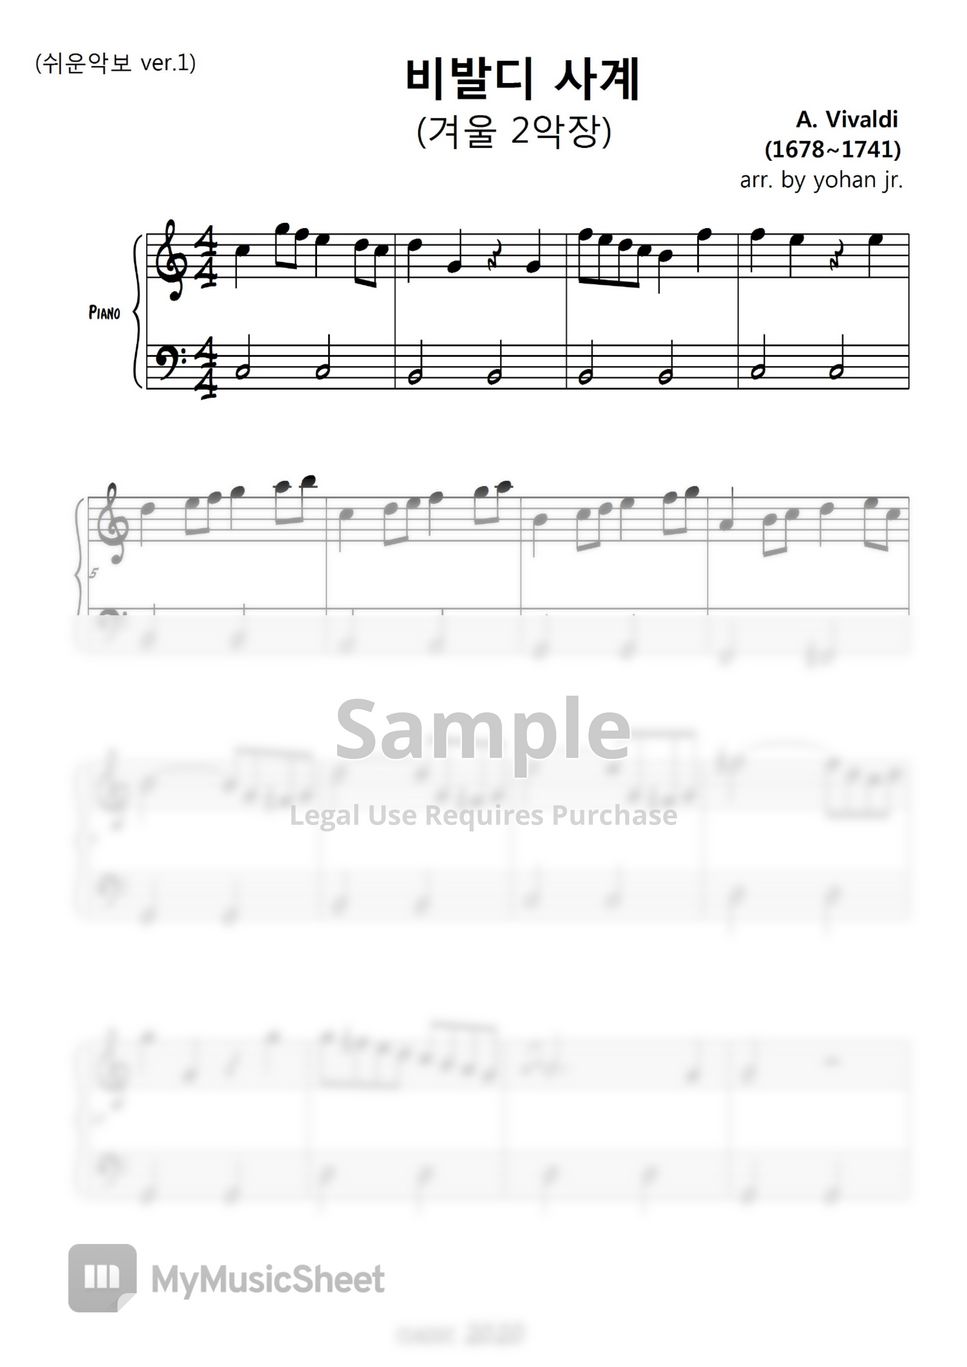 A. Vivaldi - Winter 2nd. (easy piano) by classic2020